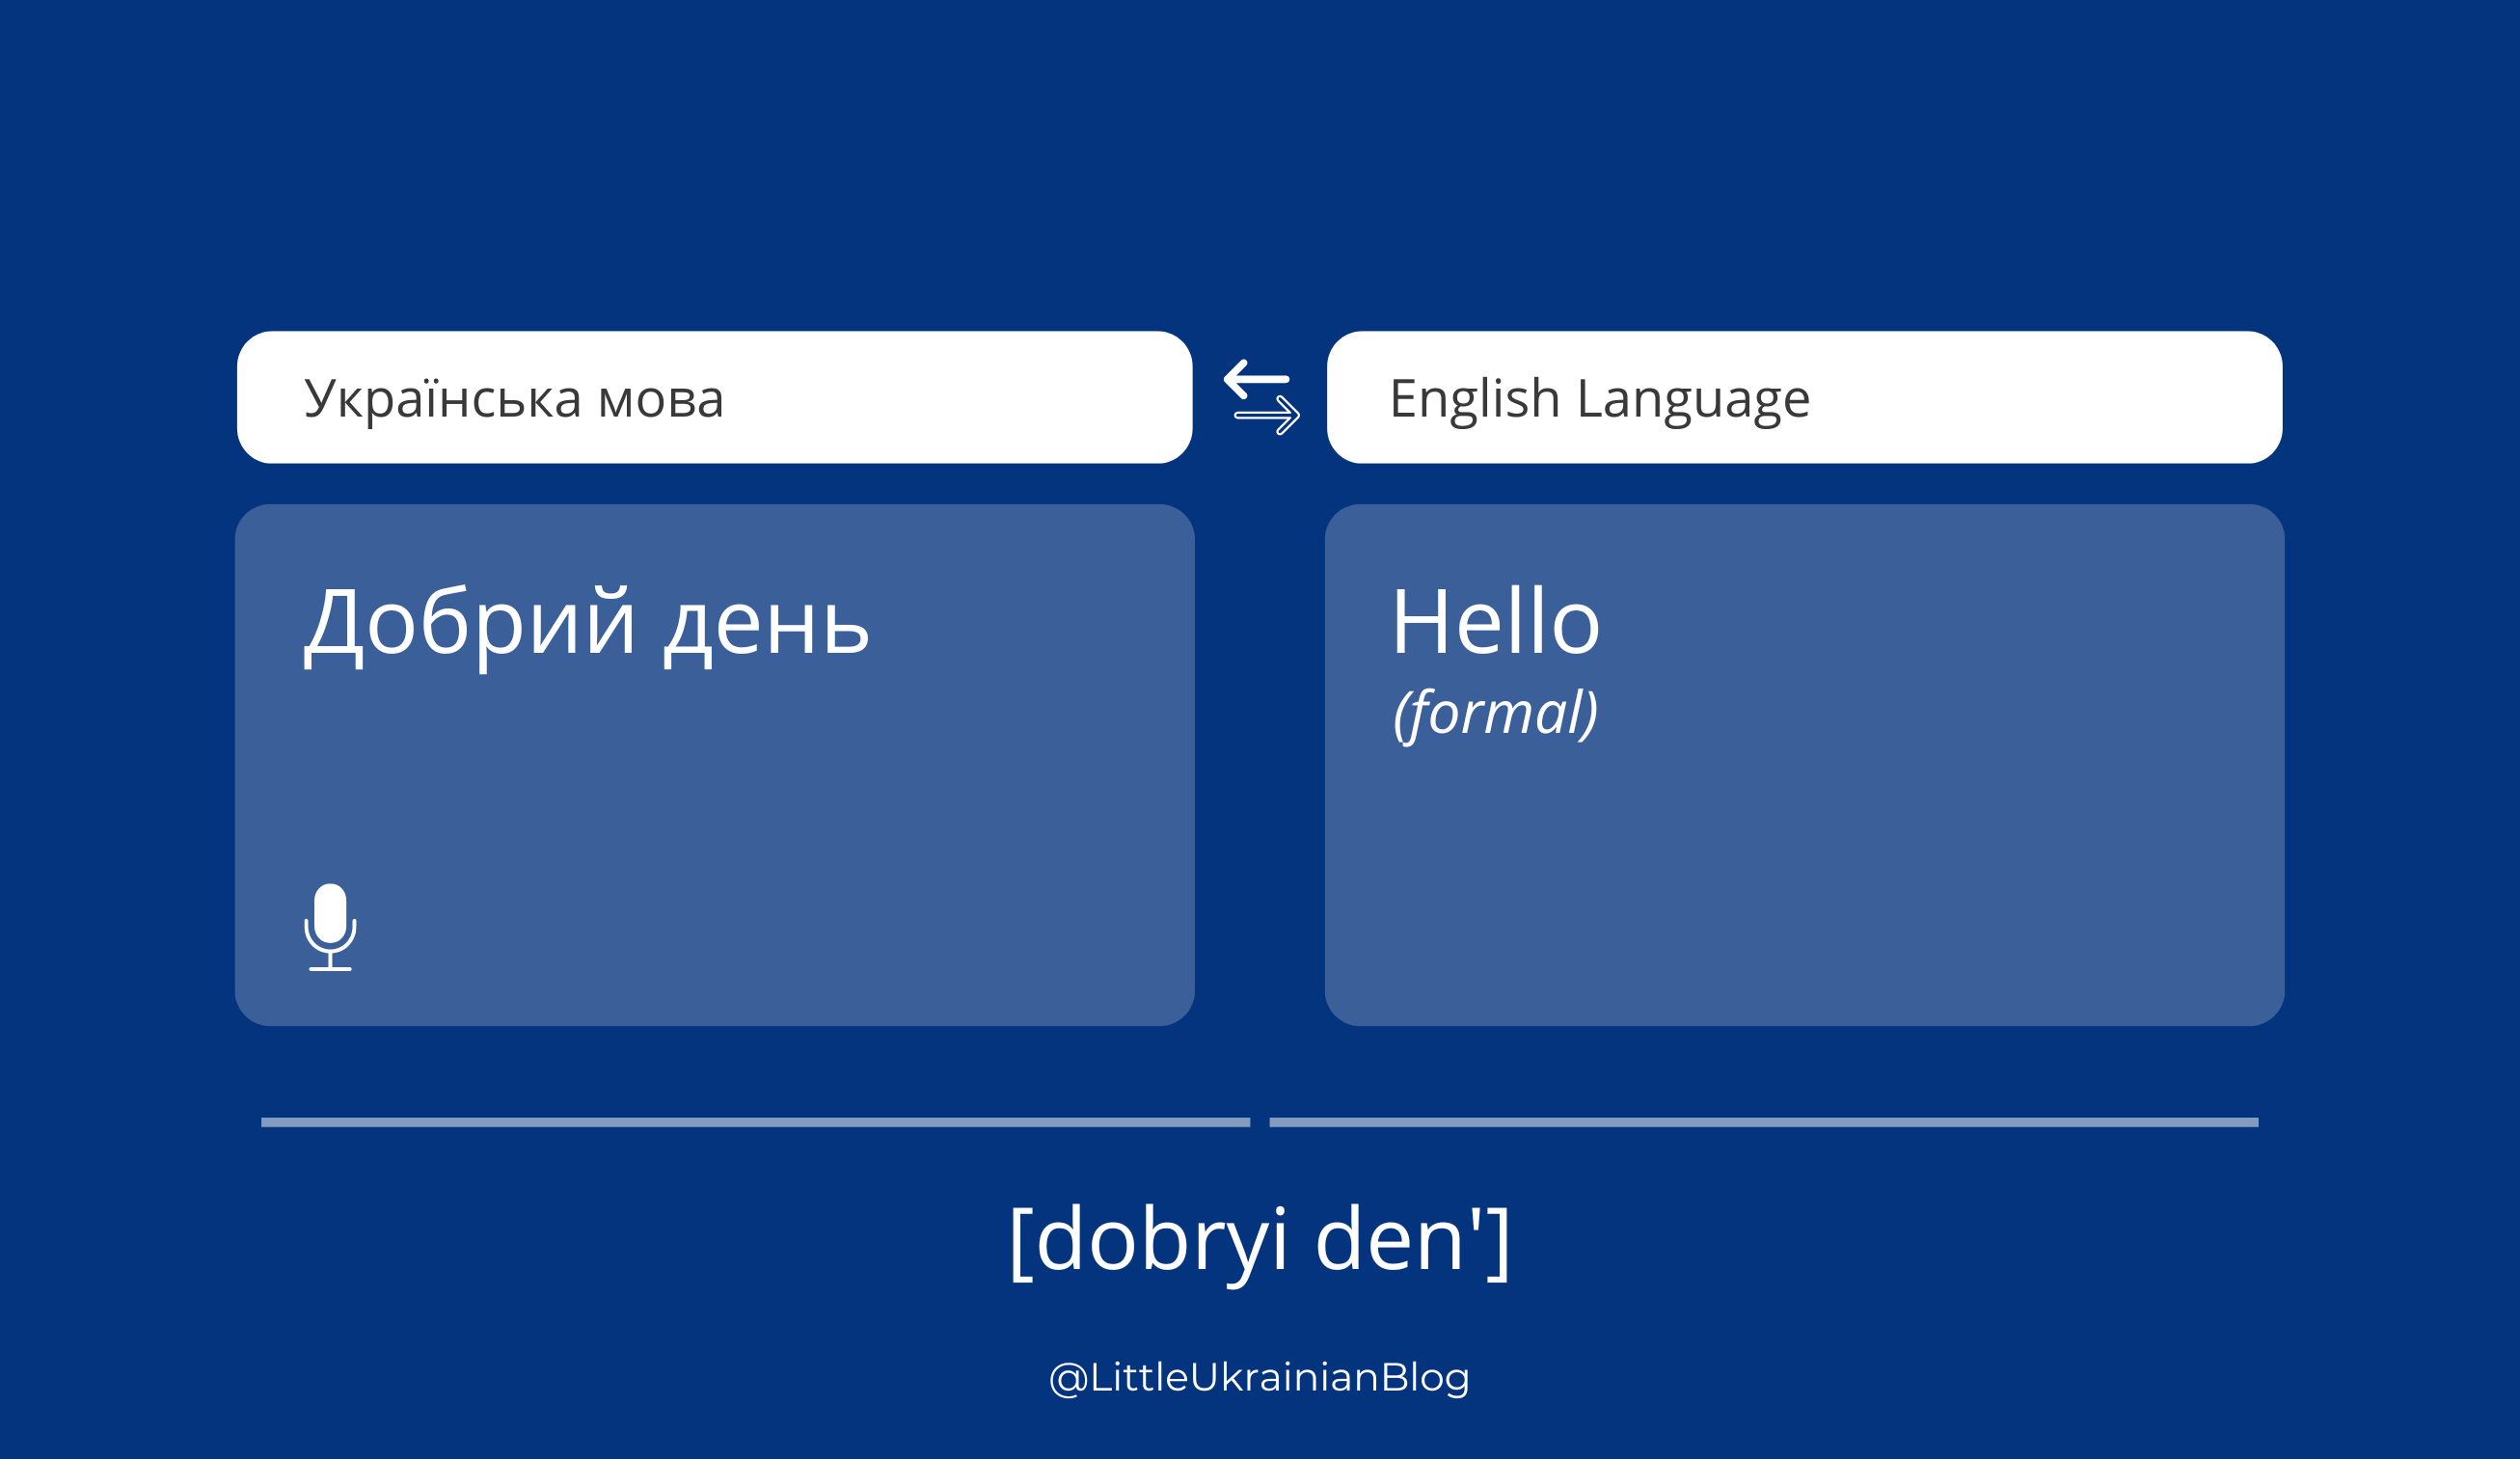 Ukrainian Greetings for Beginners, Добрий день, dobryi den, Hello in Ukrainian